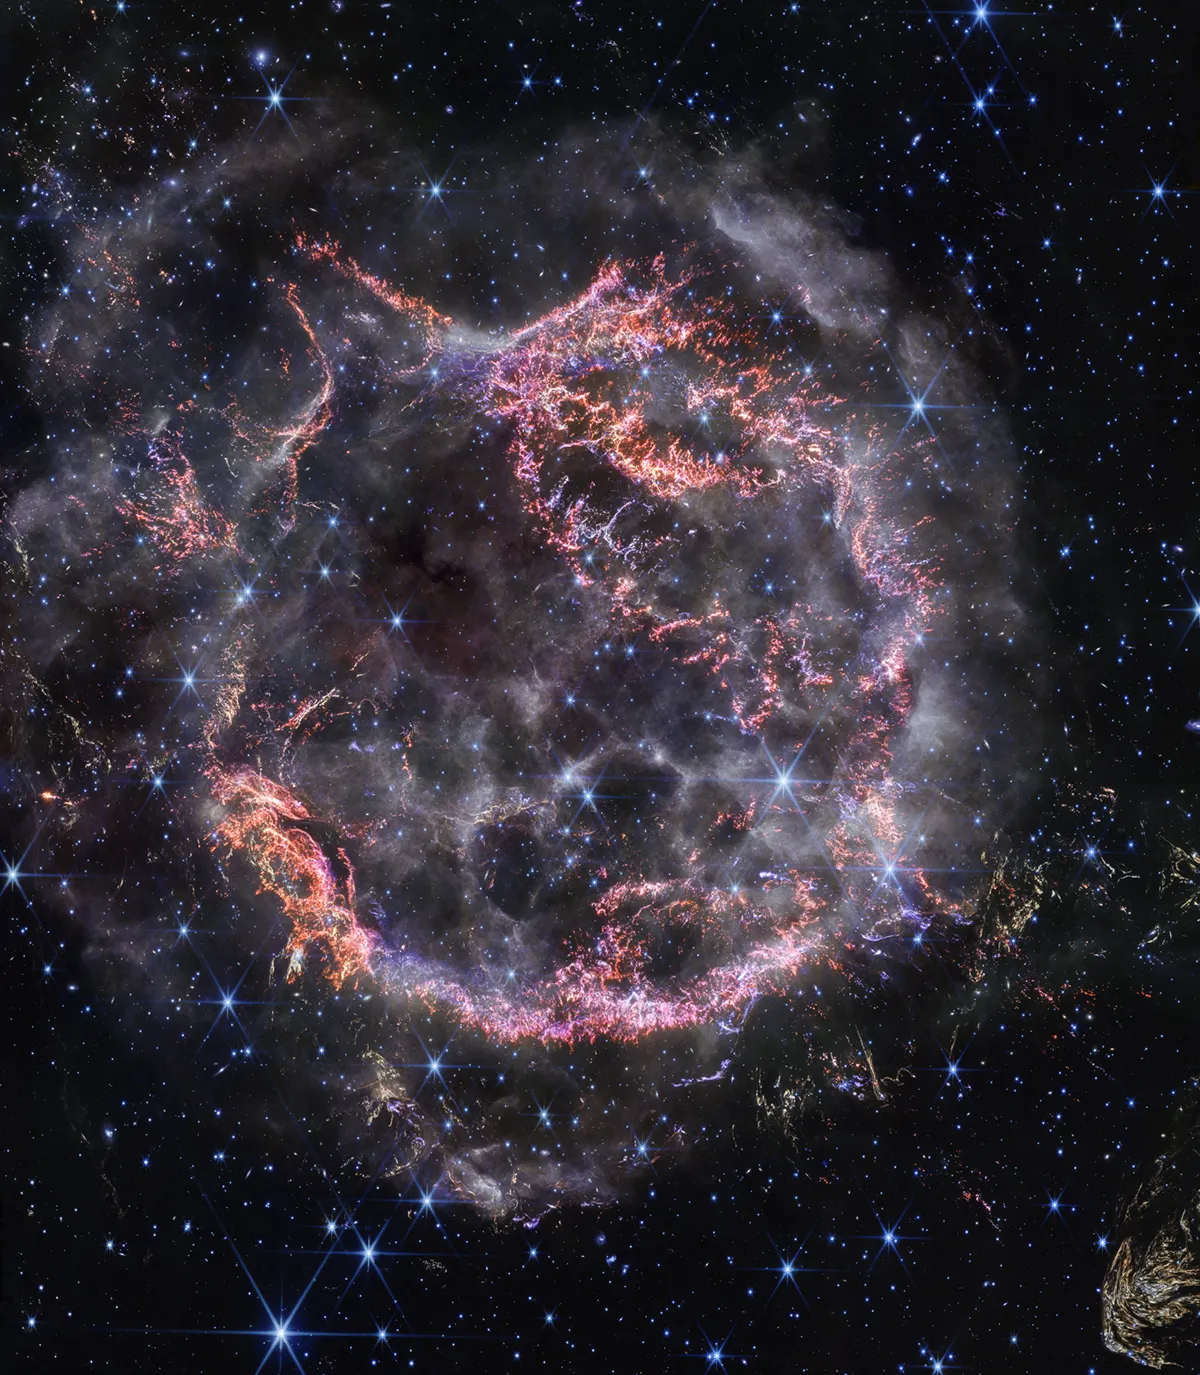 Webb Telescope NIRCam image of supernova remnant Cassopeia A. Credit: NASA, ESA, CSA, STScI, Danny Milisavljevic (Purdue University), Ilse De Looze (UGent), Tea Temim (Princeton University)